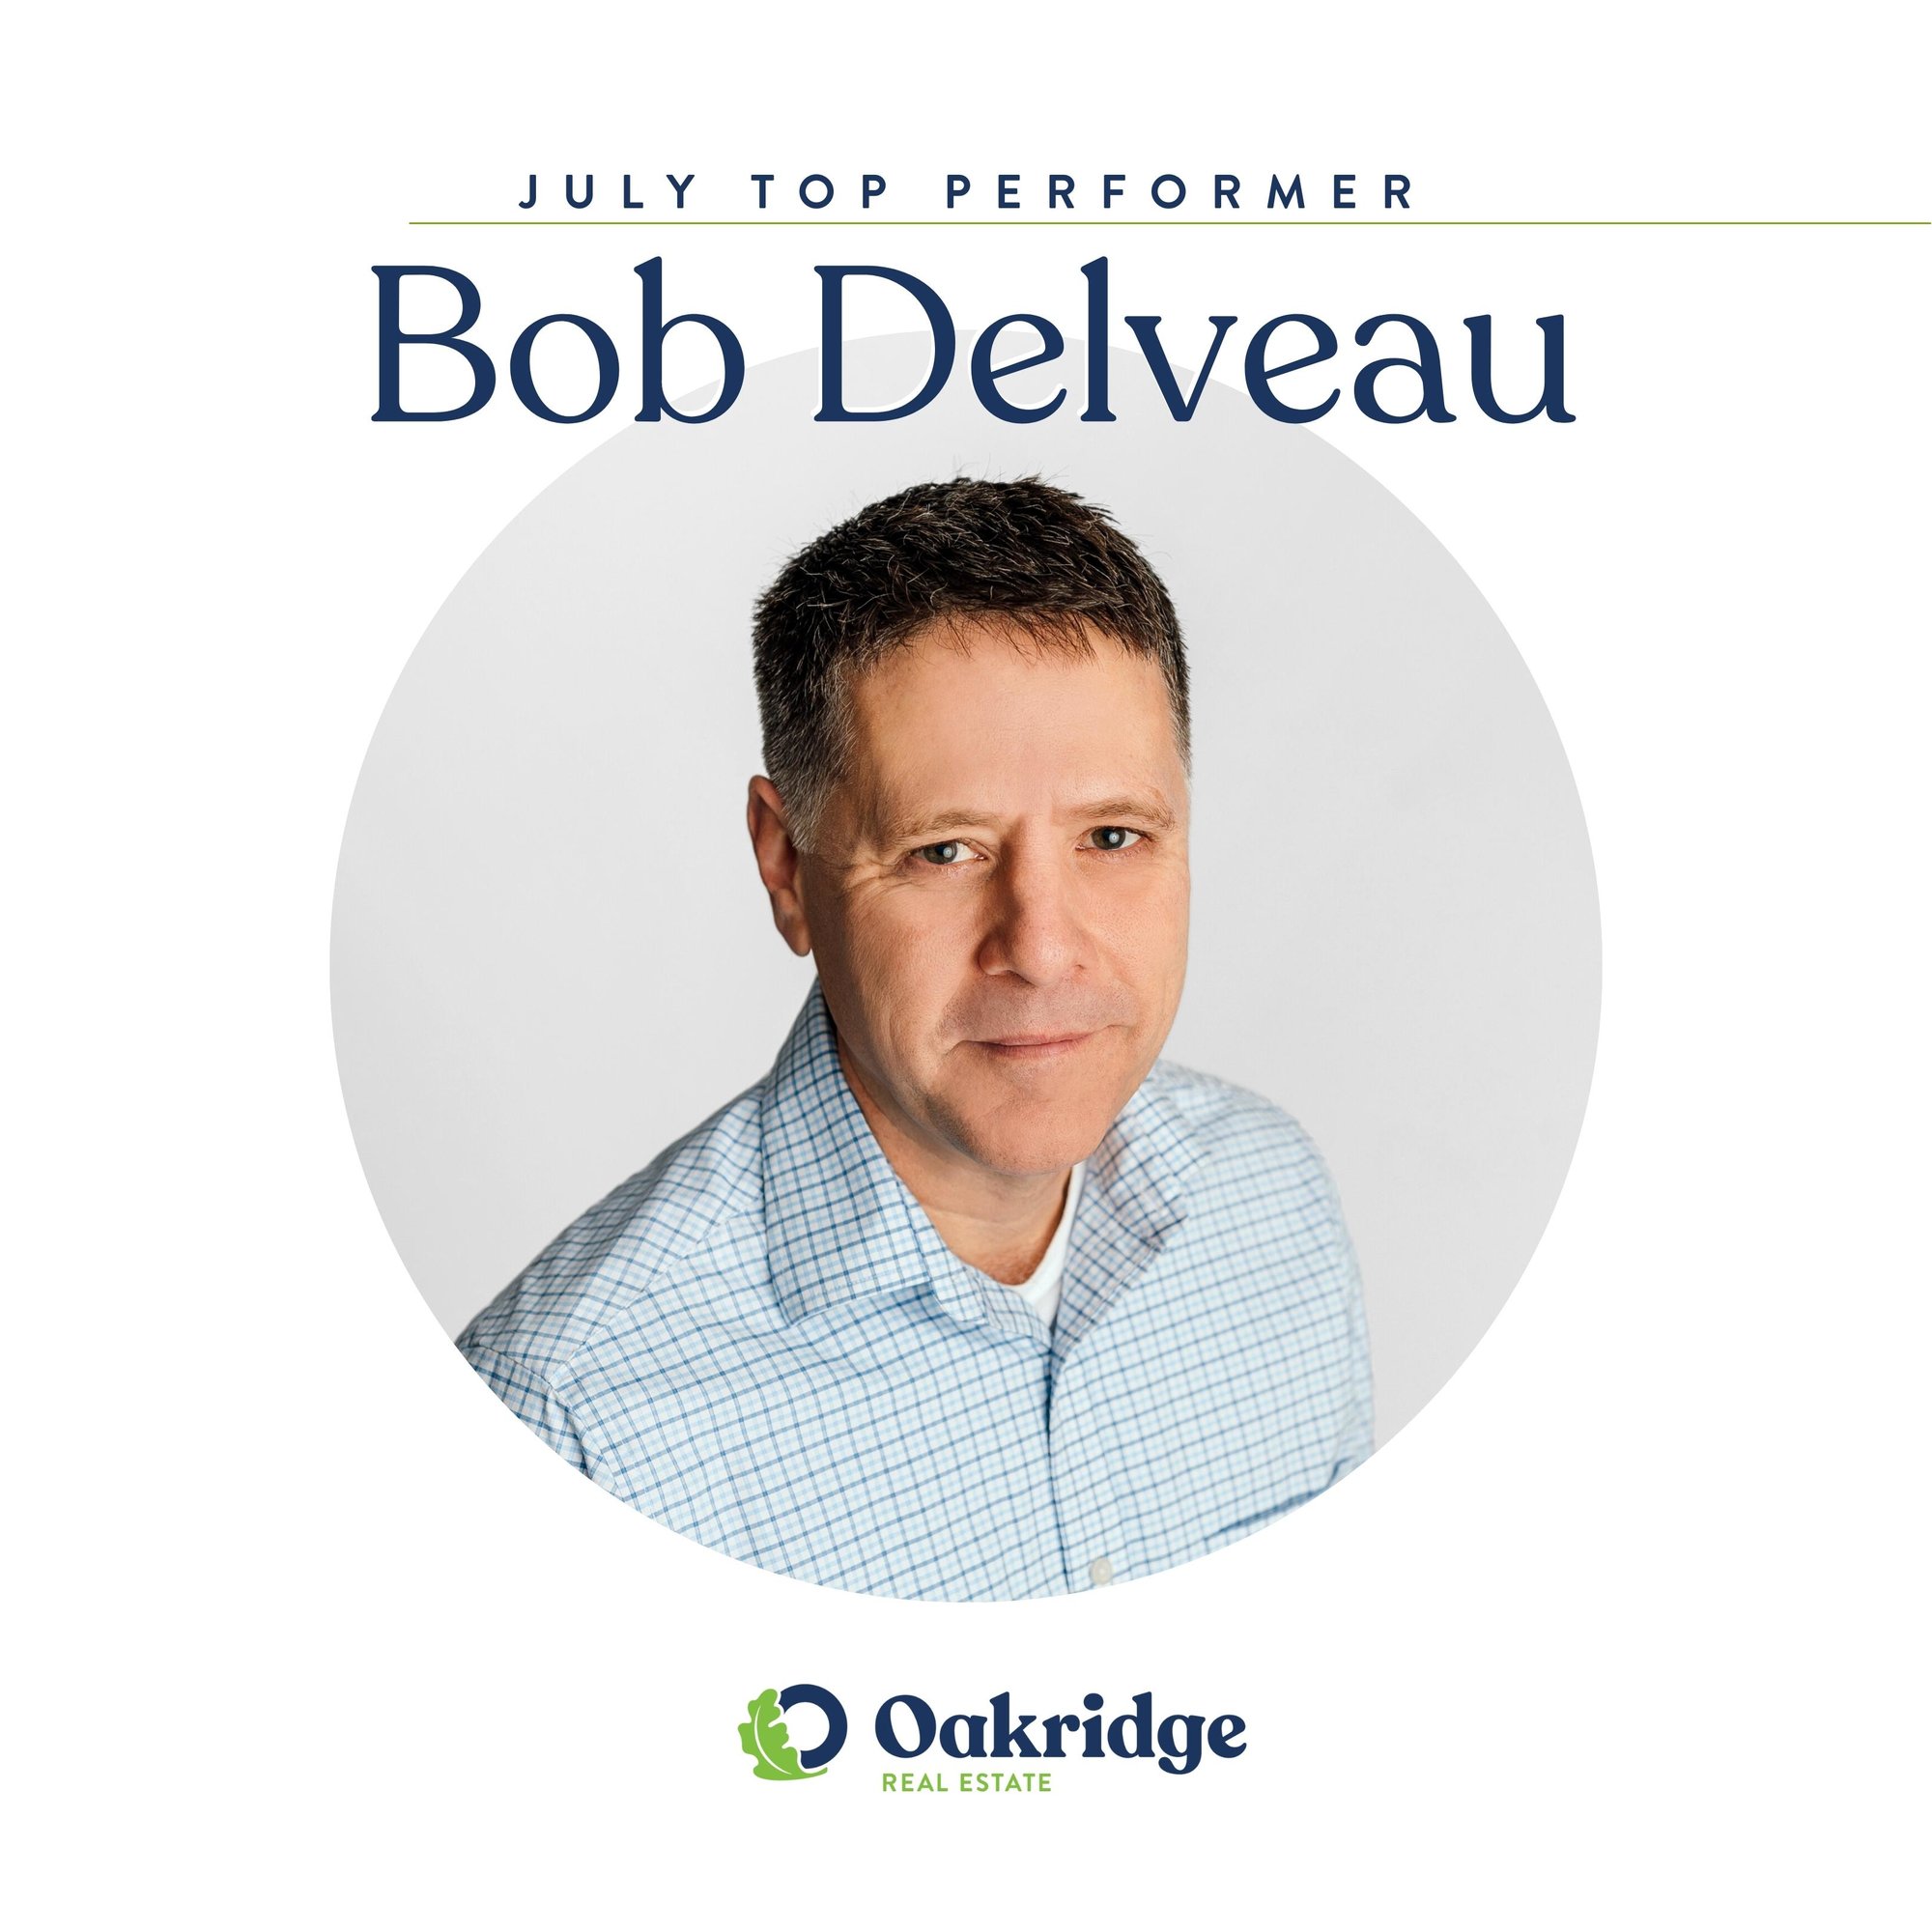 Bob Delveau July Top Performer | Oakridge Real Estate